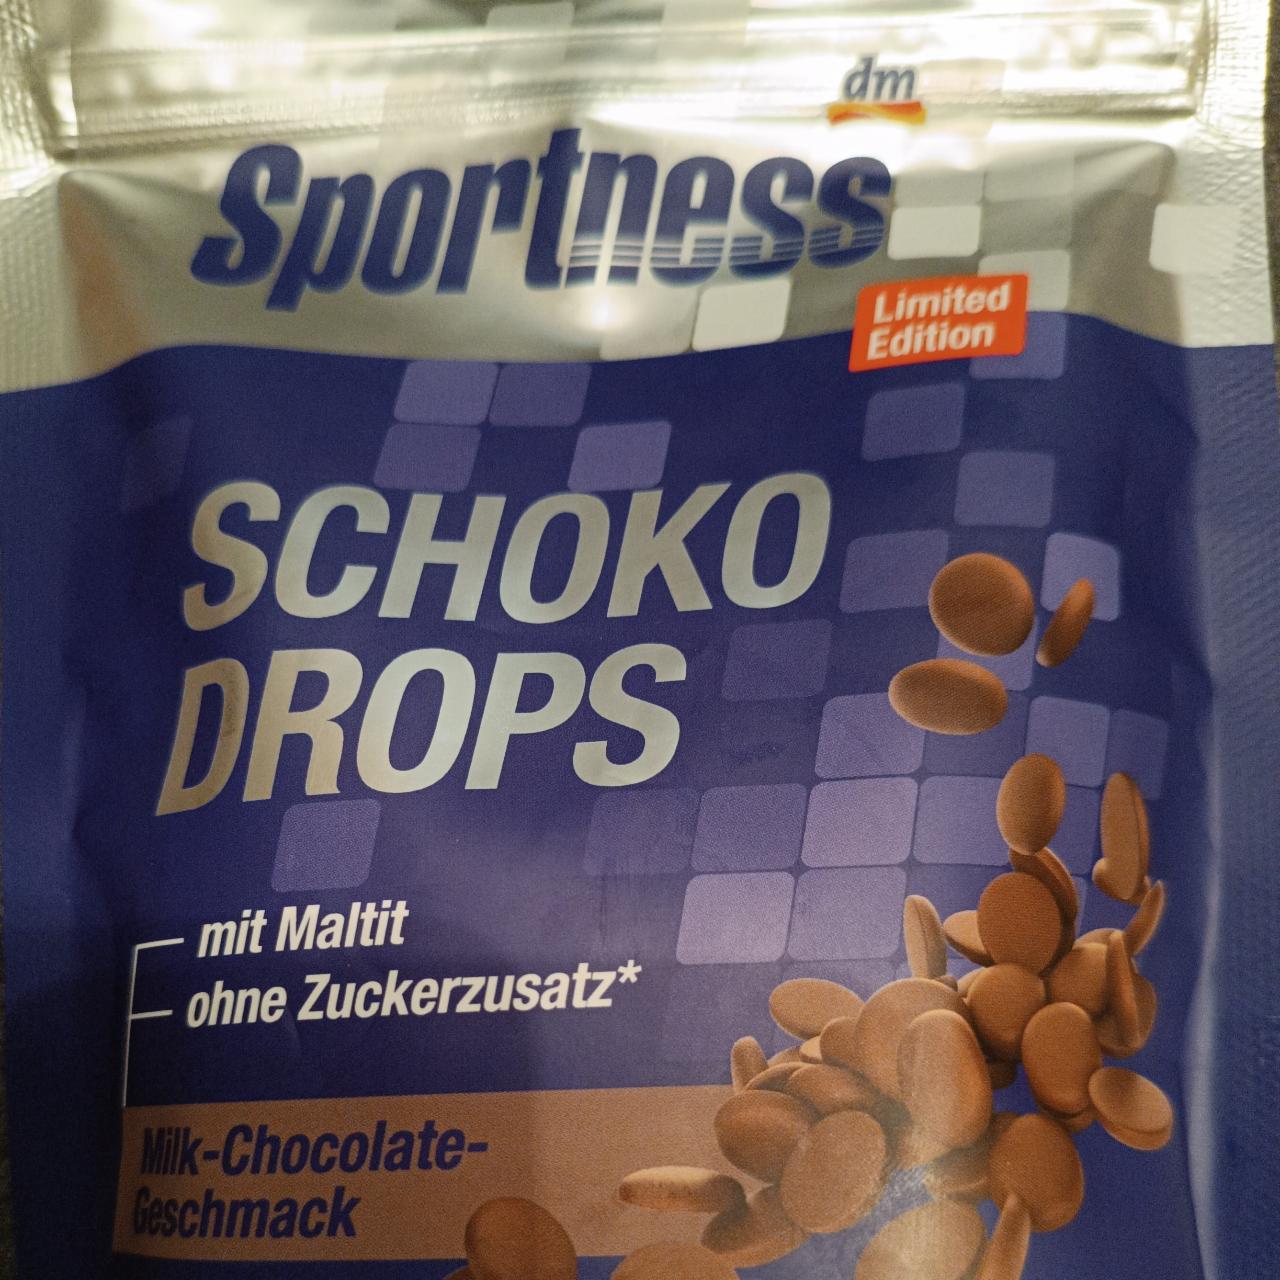 Képek - Schoko drops milk-chocolate-geschmack Sportness